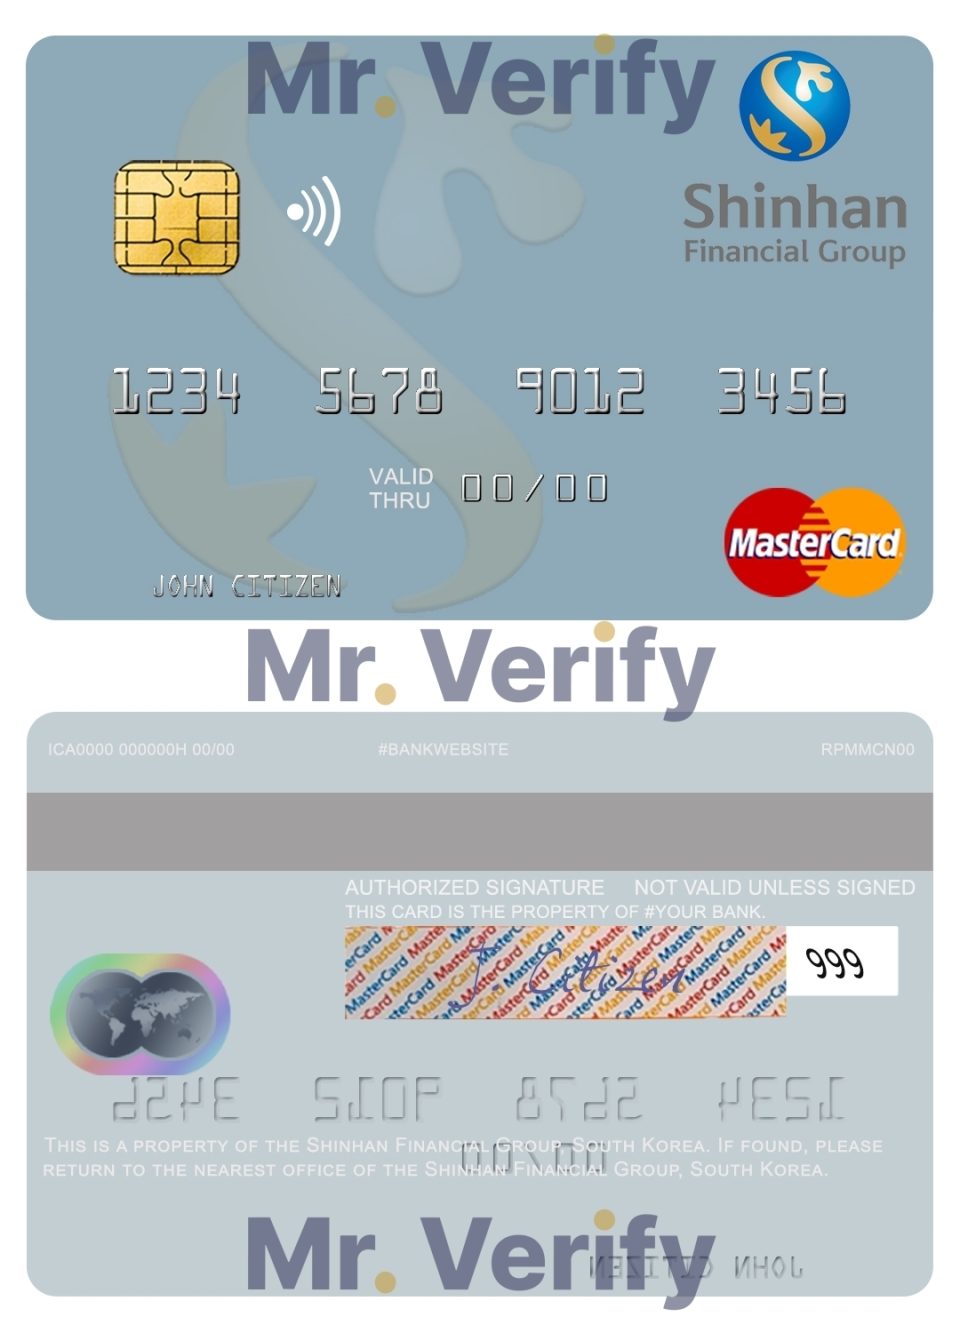 Fillable South Korea Shinhan Financial Group mastercard credit card Templates | Layer-Based PSD